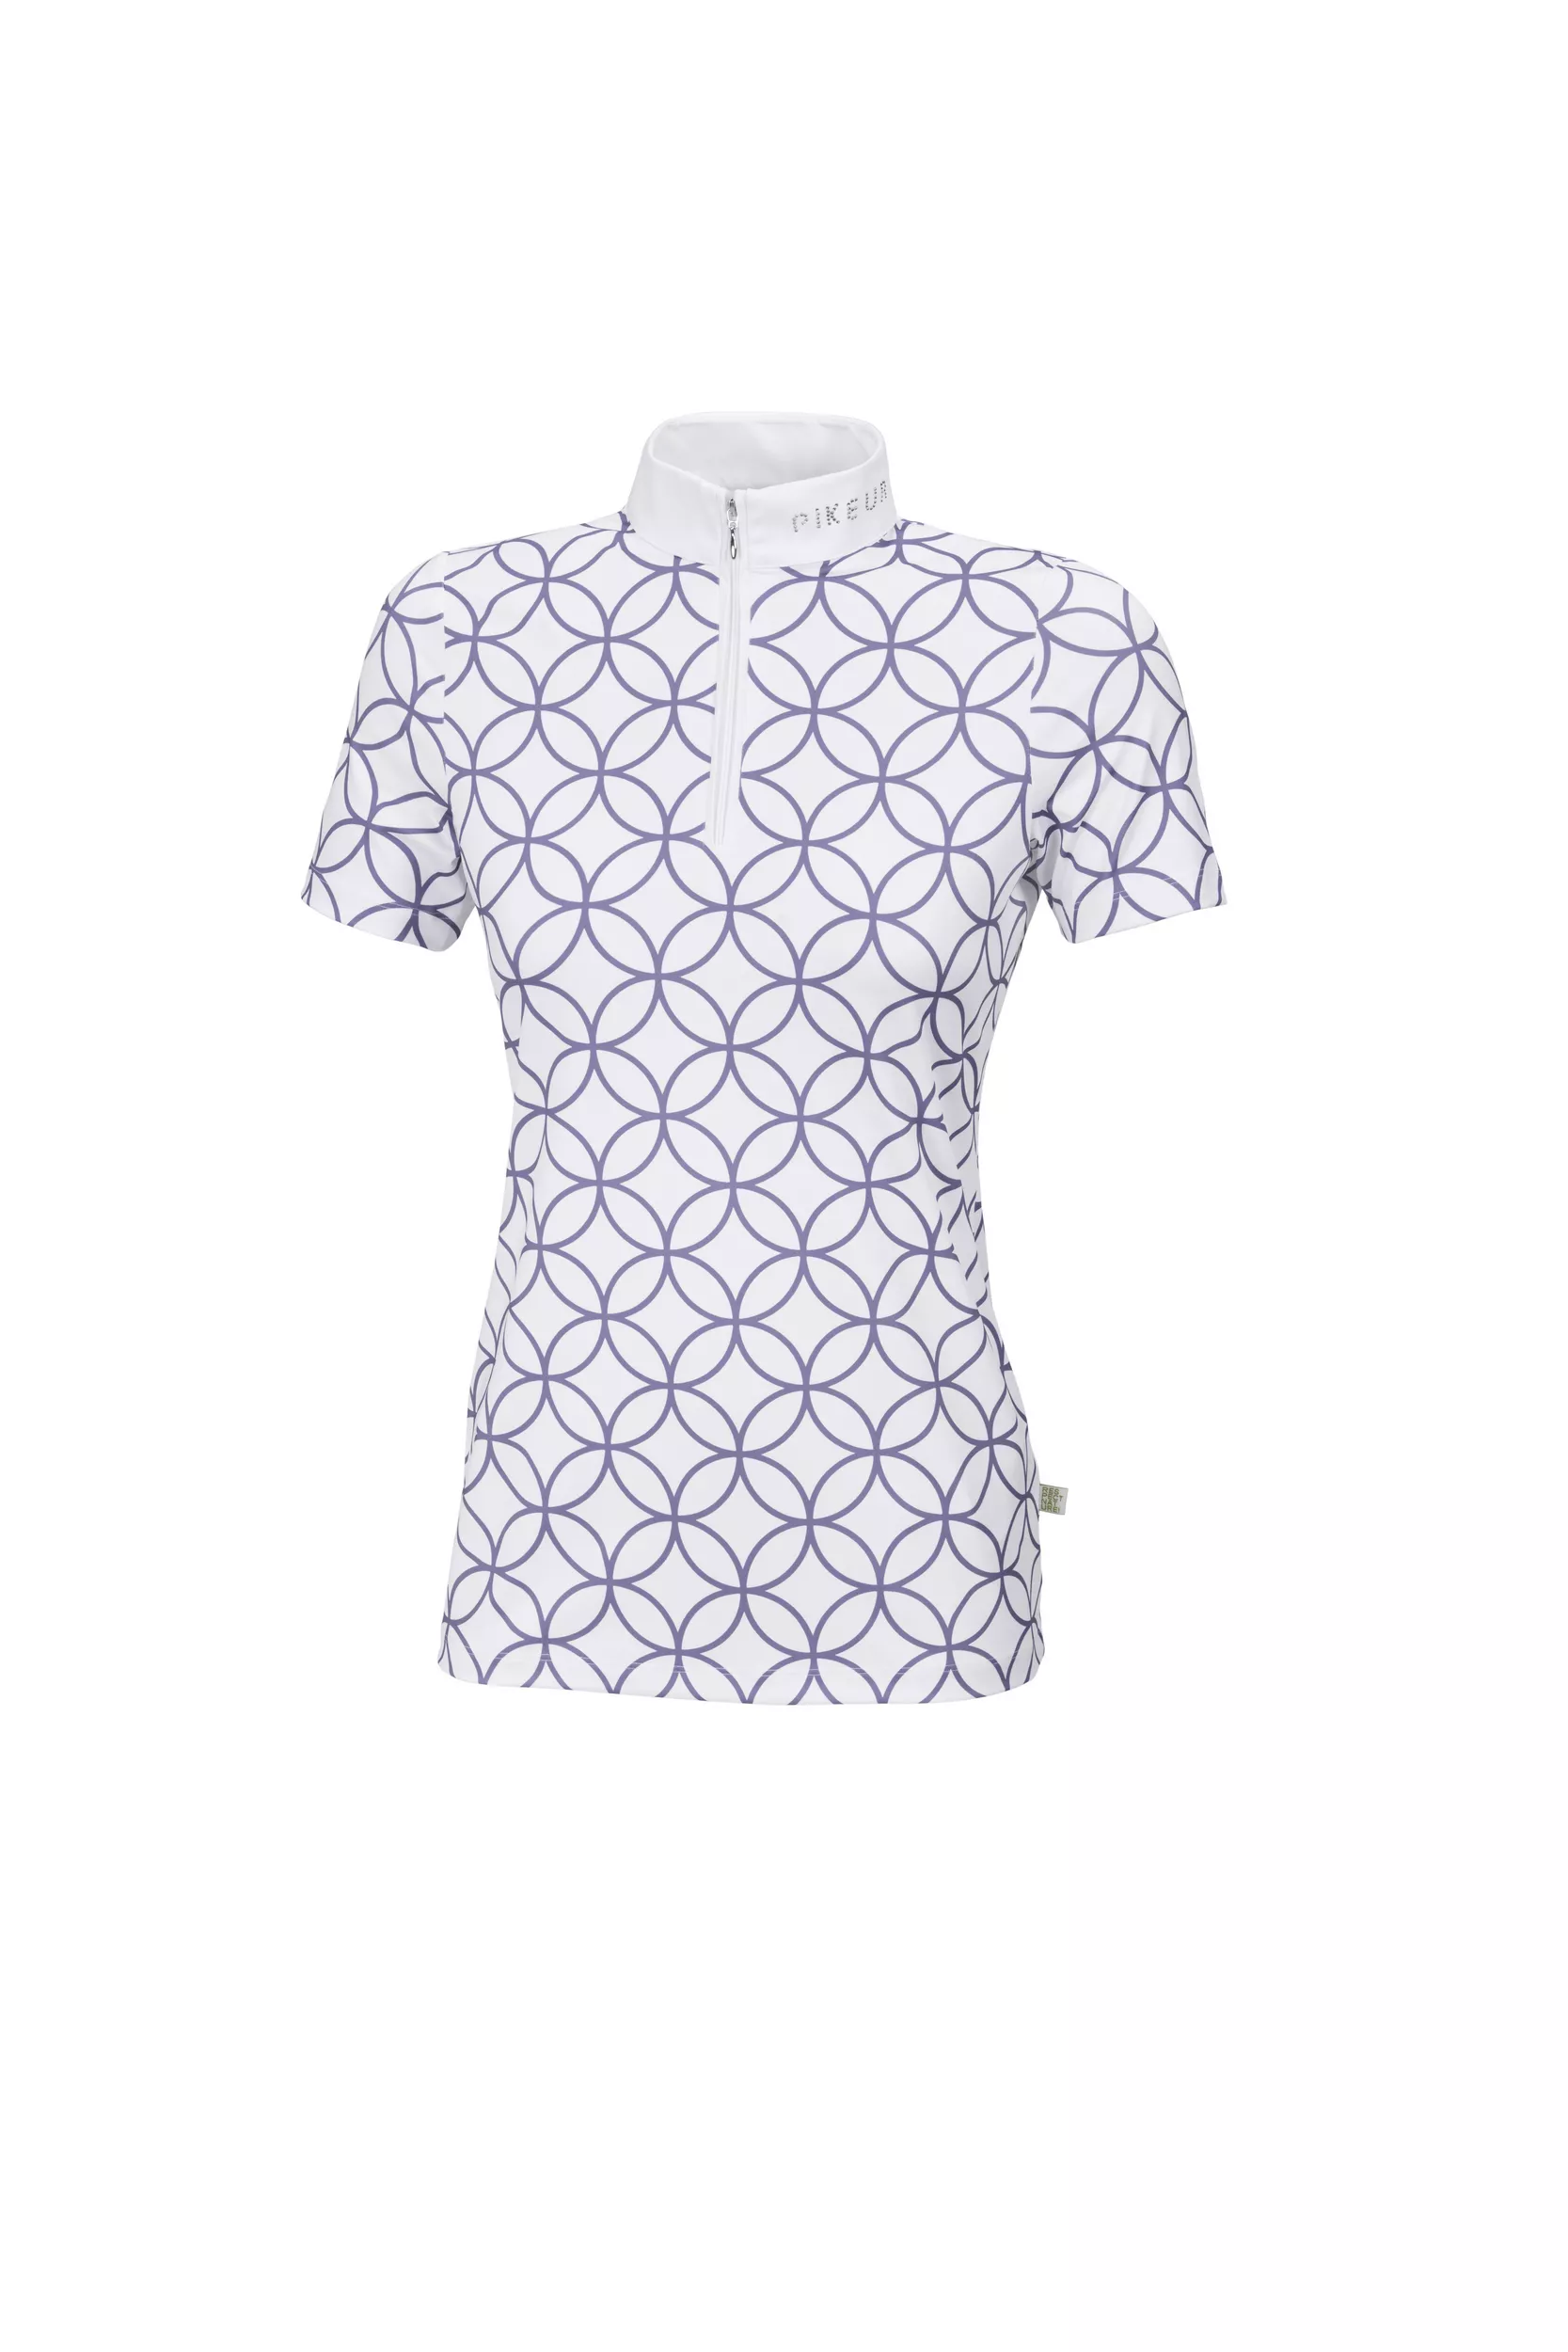 Ladies Tournament Shirt Marou, Sportswear 22, white/silver violet